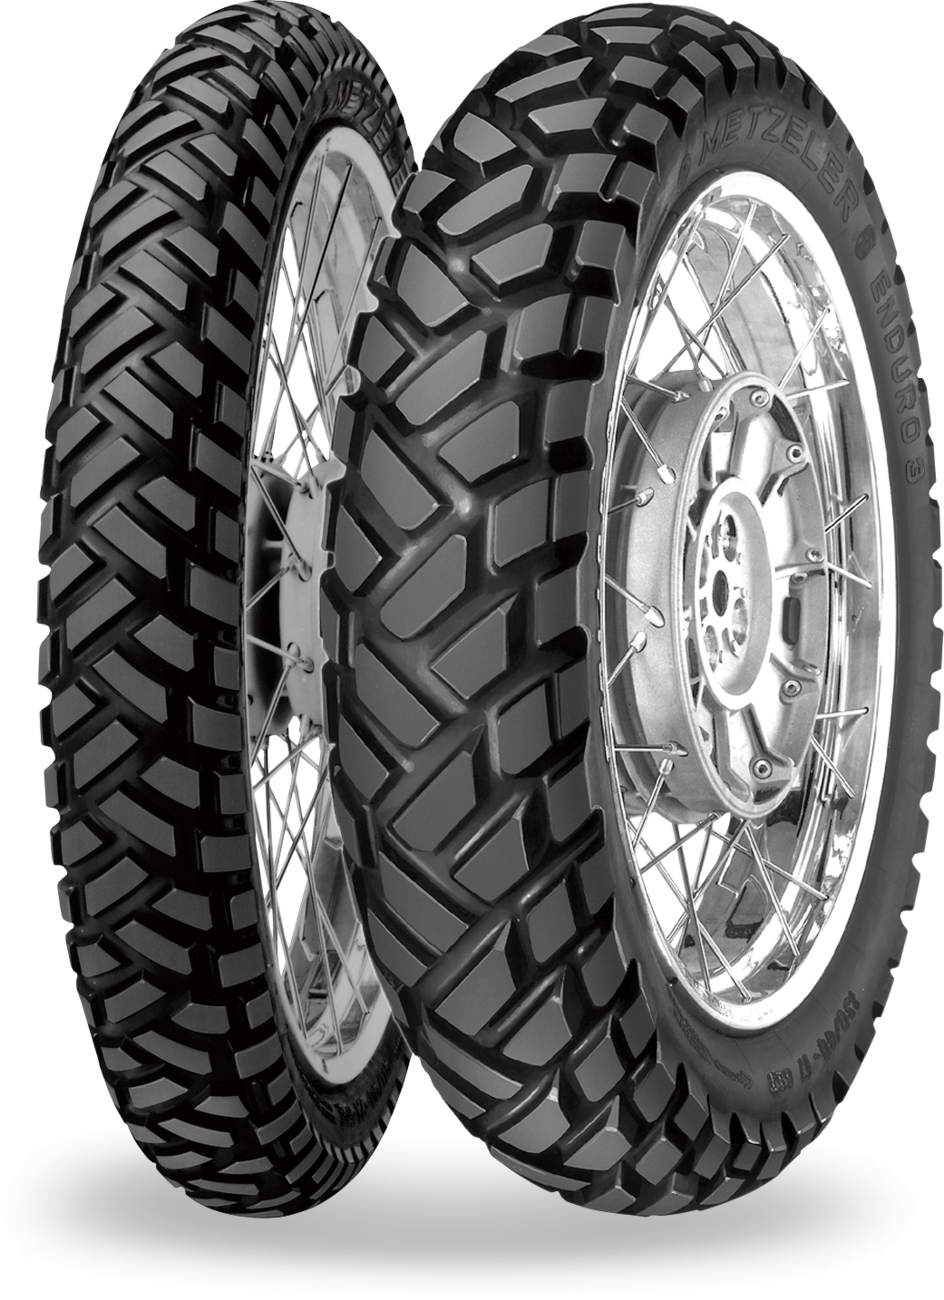 METZELER Tire - Enduro 3 Sahara - Rear - 120/90-17 - 64S 143600